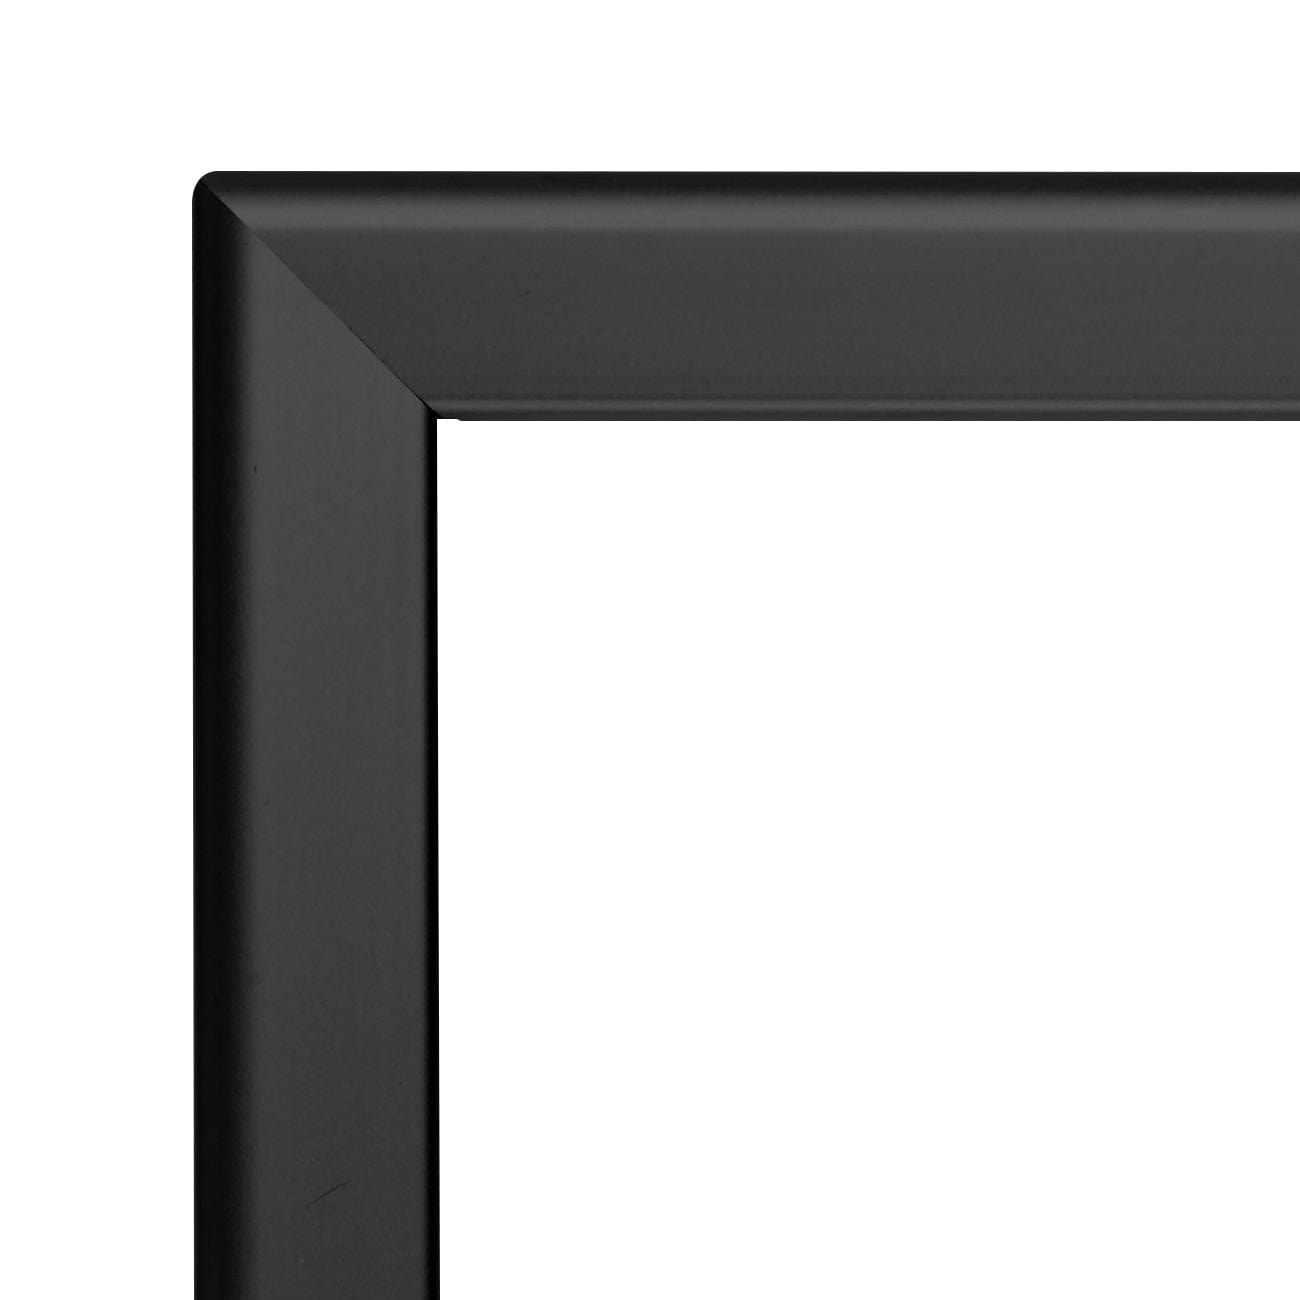 24x32 Black SnapeZo® Snap Frame - 1.25" Profile - Snap Frames Direct